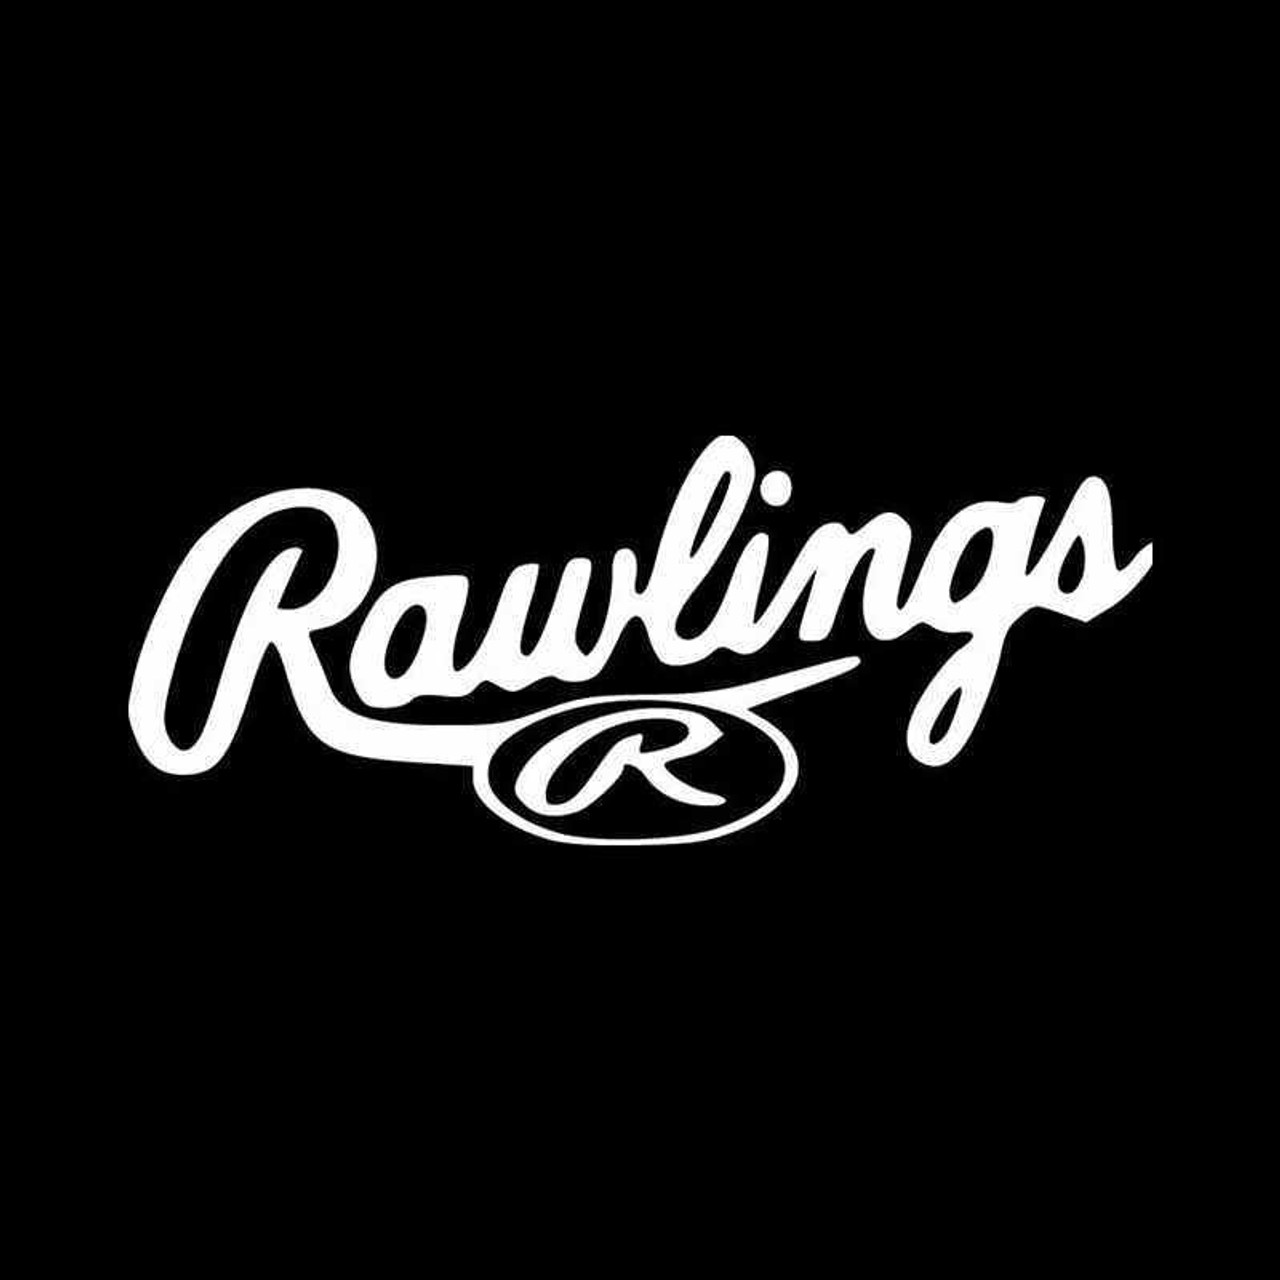 Rawlings Vinyl Decal Sticker